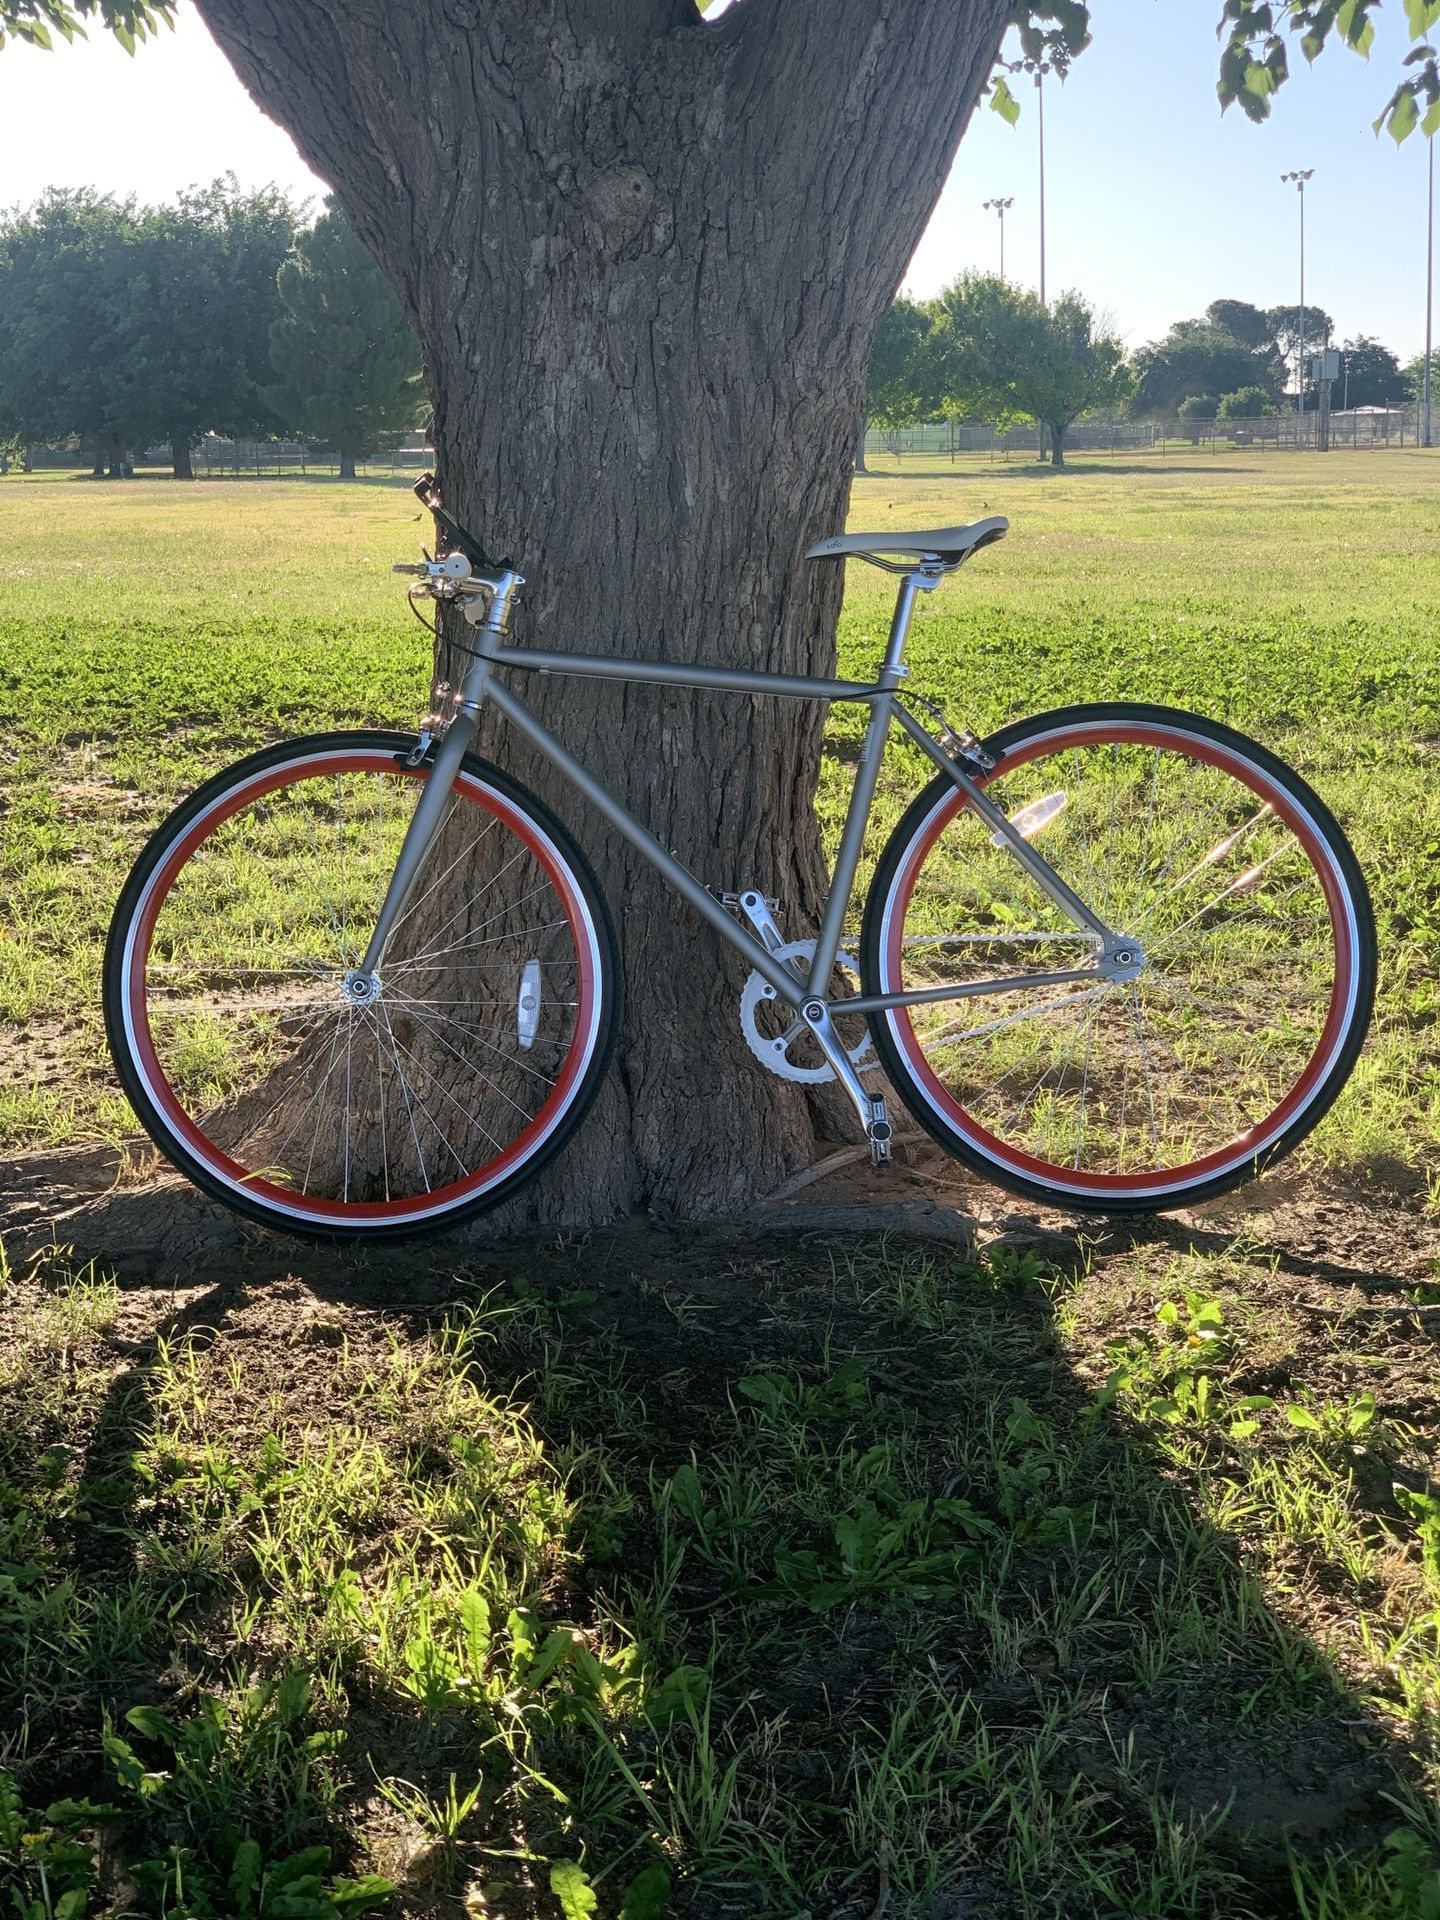 Fixie/Single gear Bicycle 